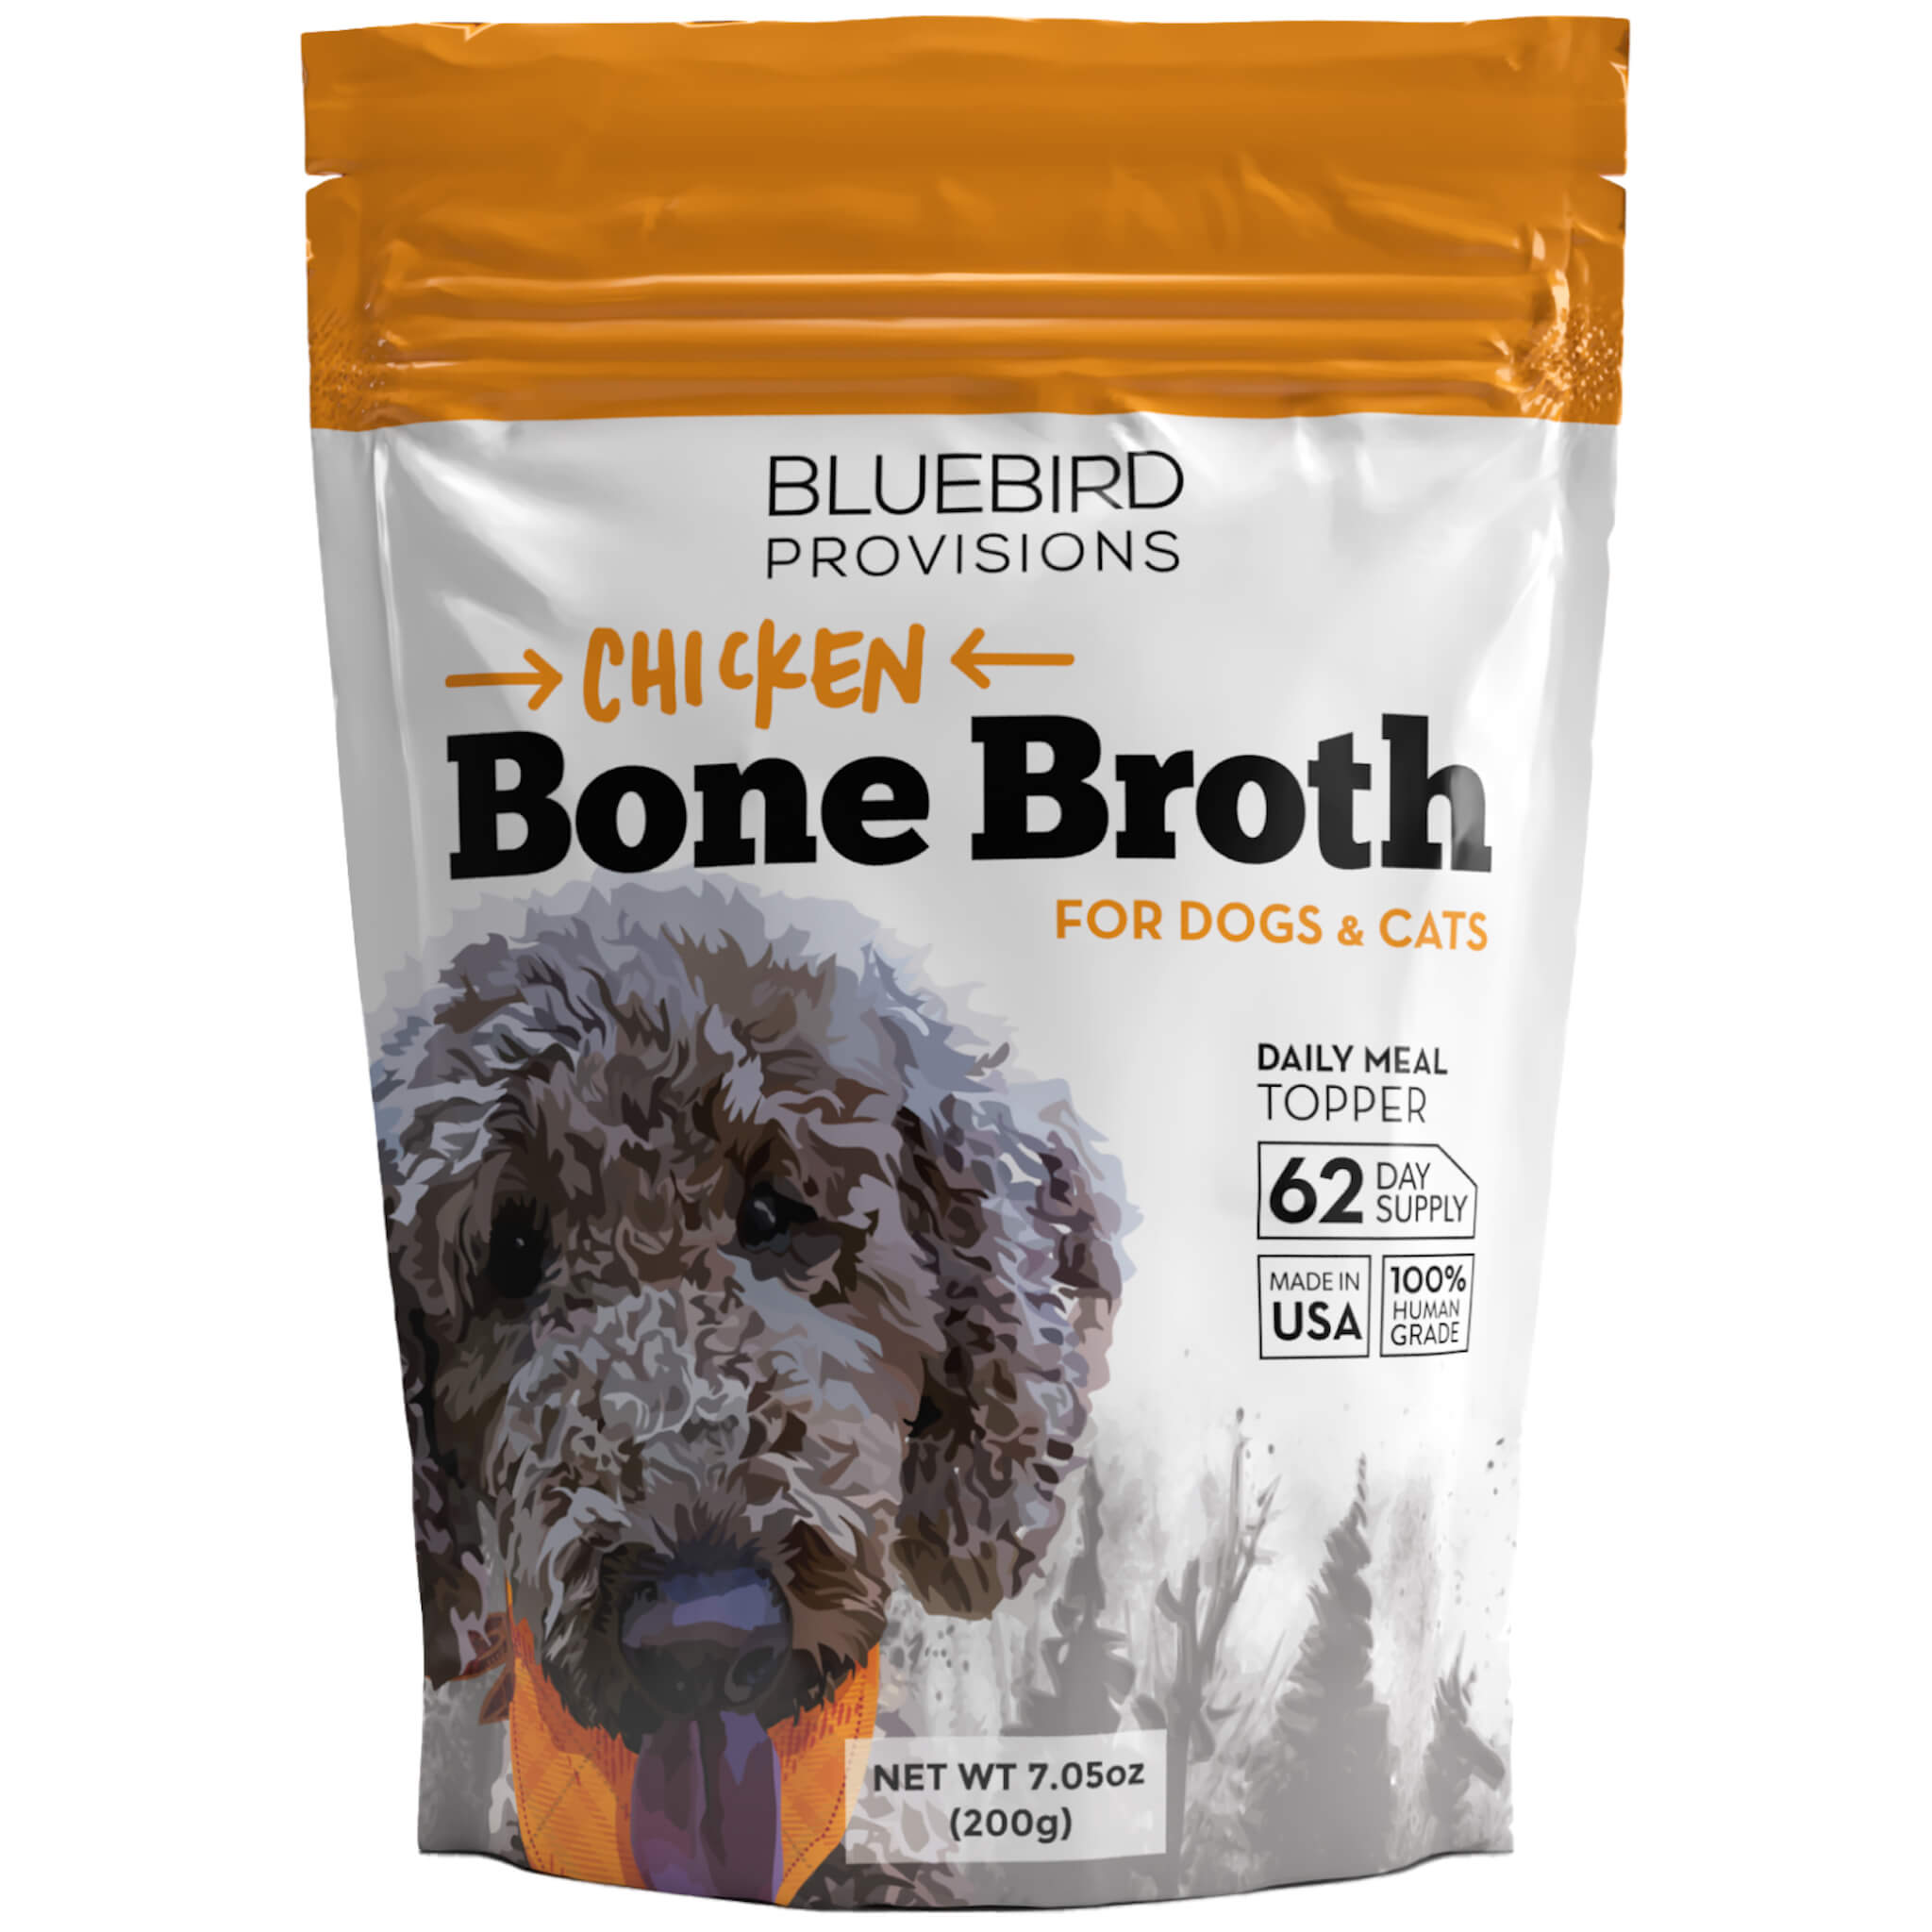 dog bone broth from bluebird provisions